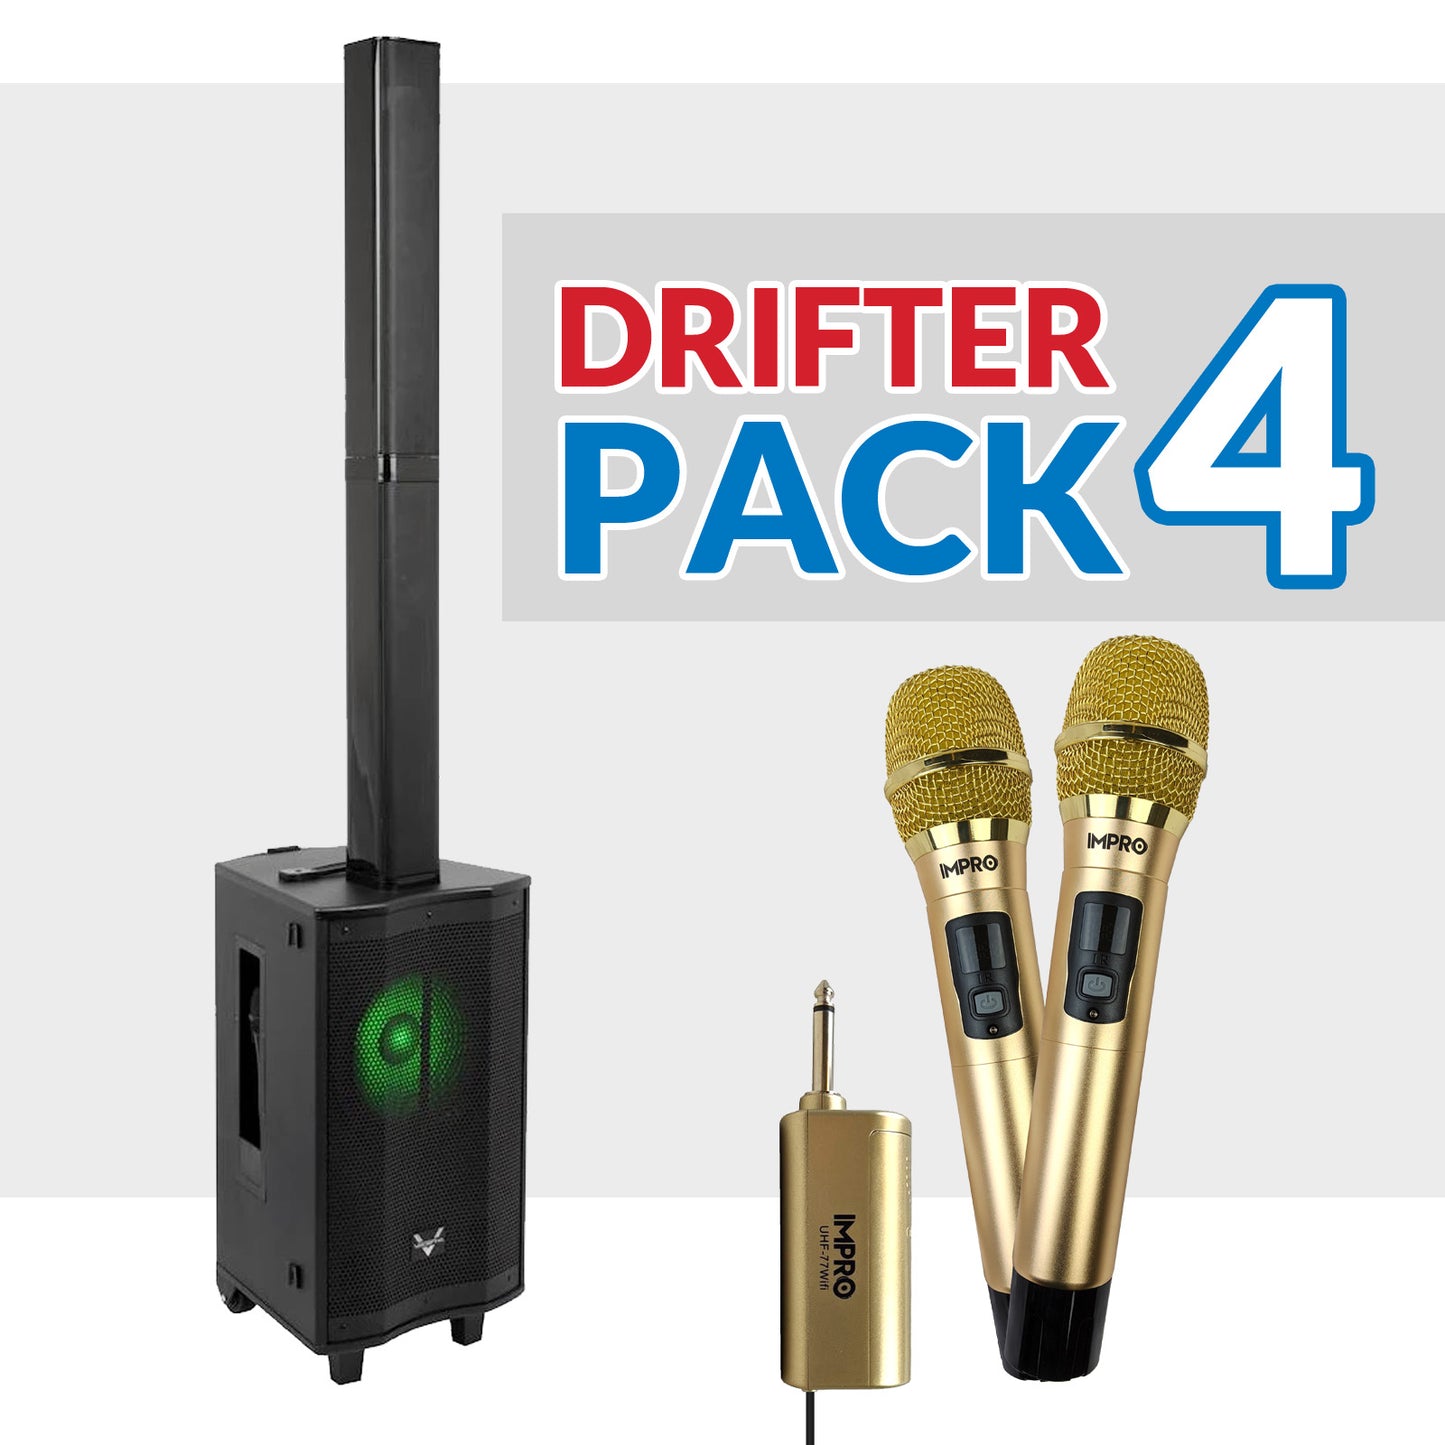 Drifter Package 04: VocoPro Drifter + ImPro UHF-77Wifi (Black or Gold)